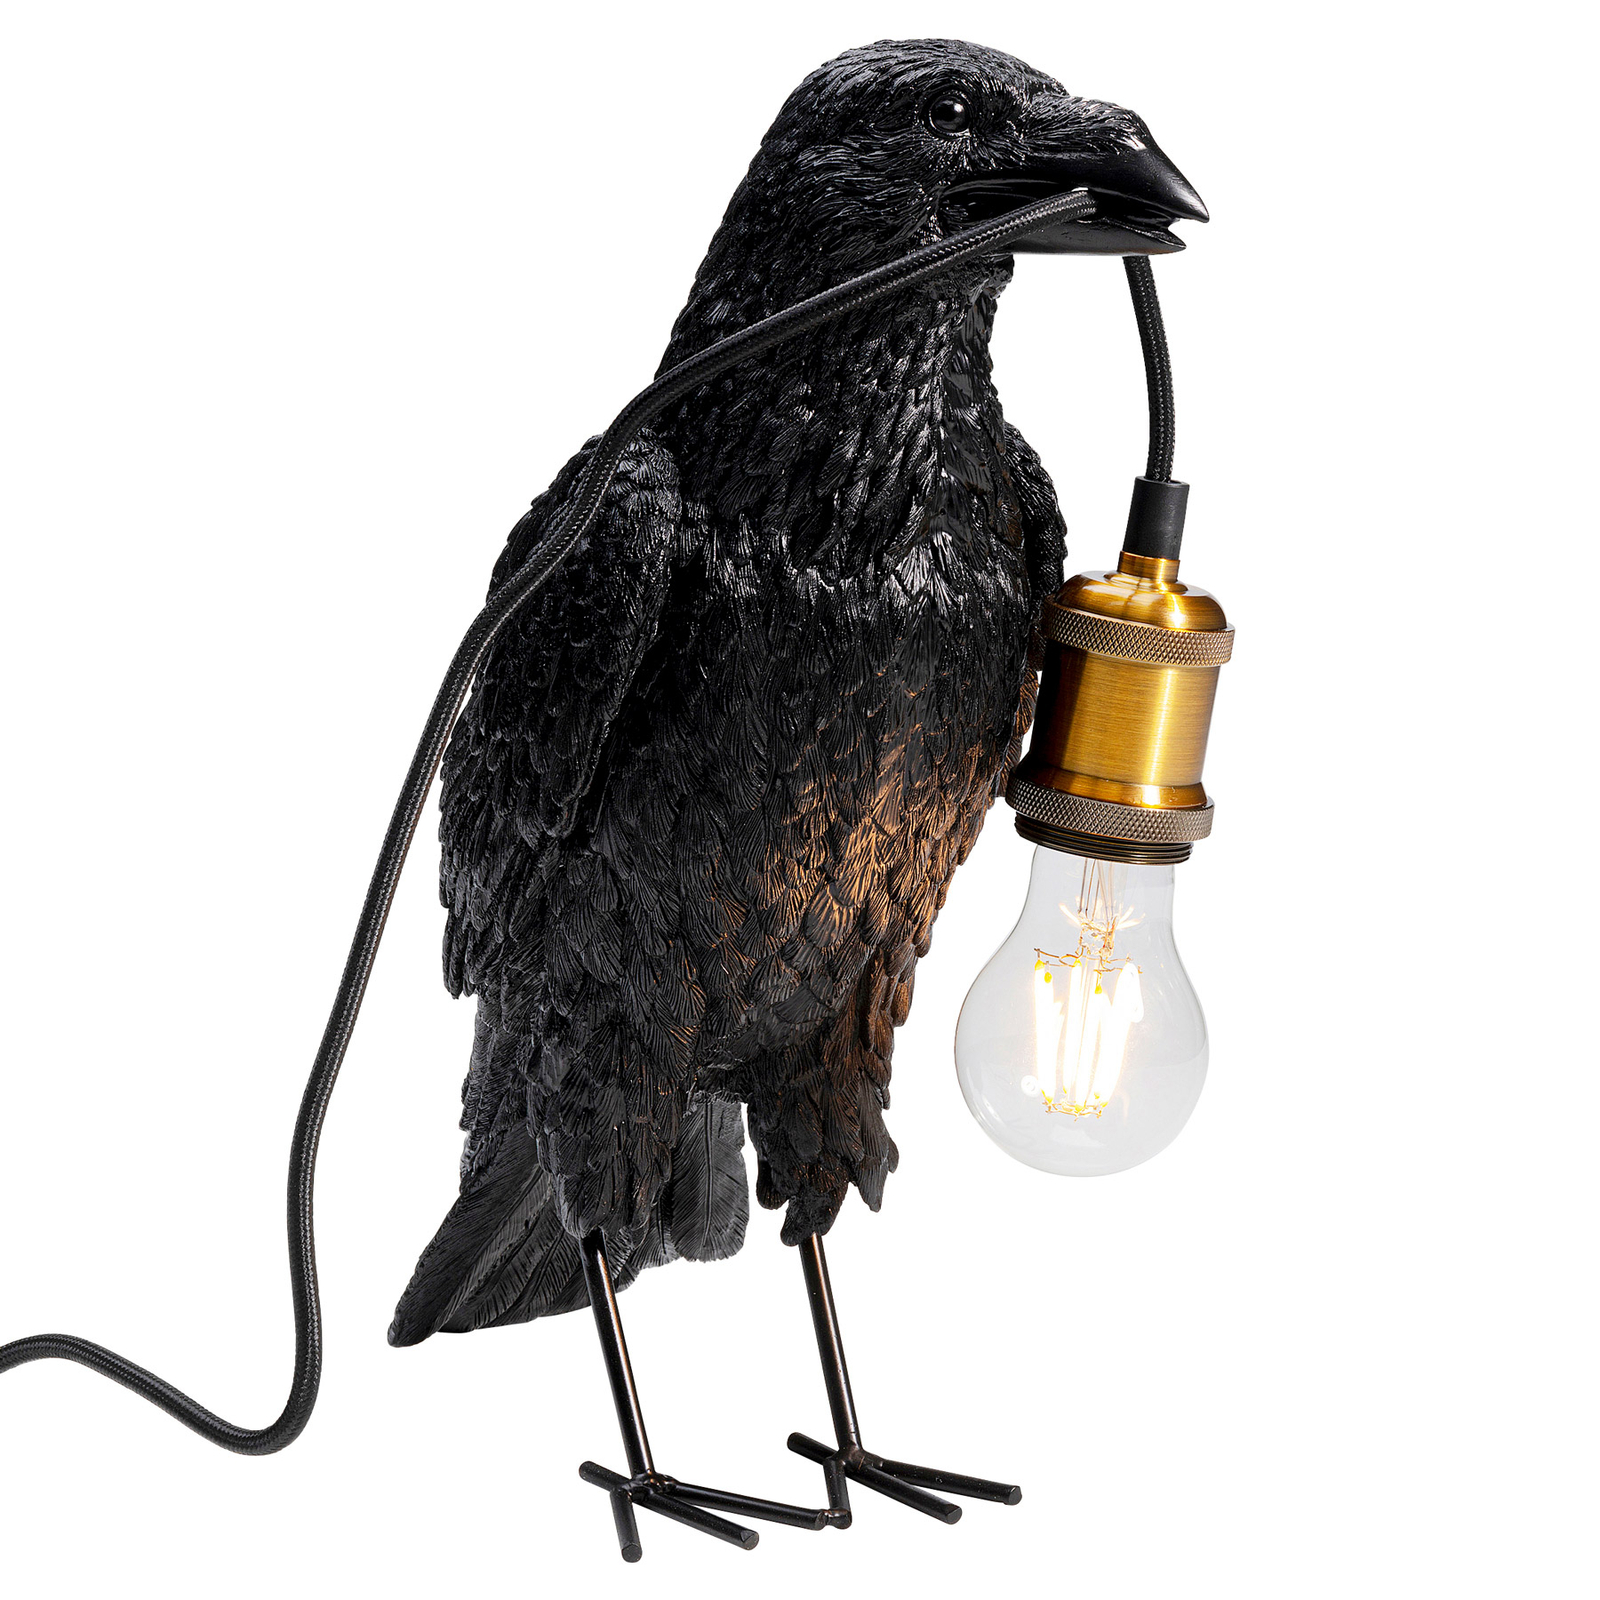 Stolná lampa KARE Animal Crow v tvare vrany